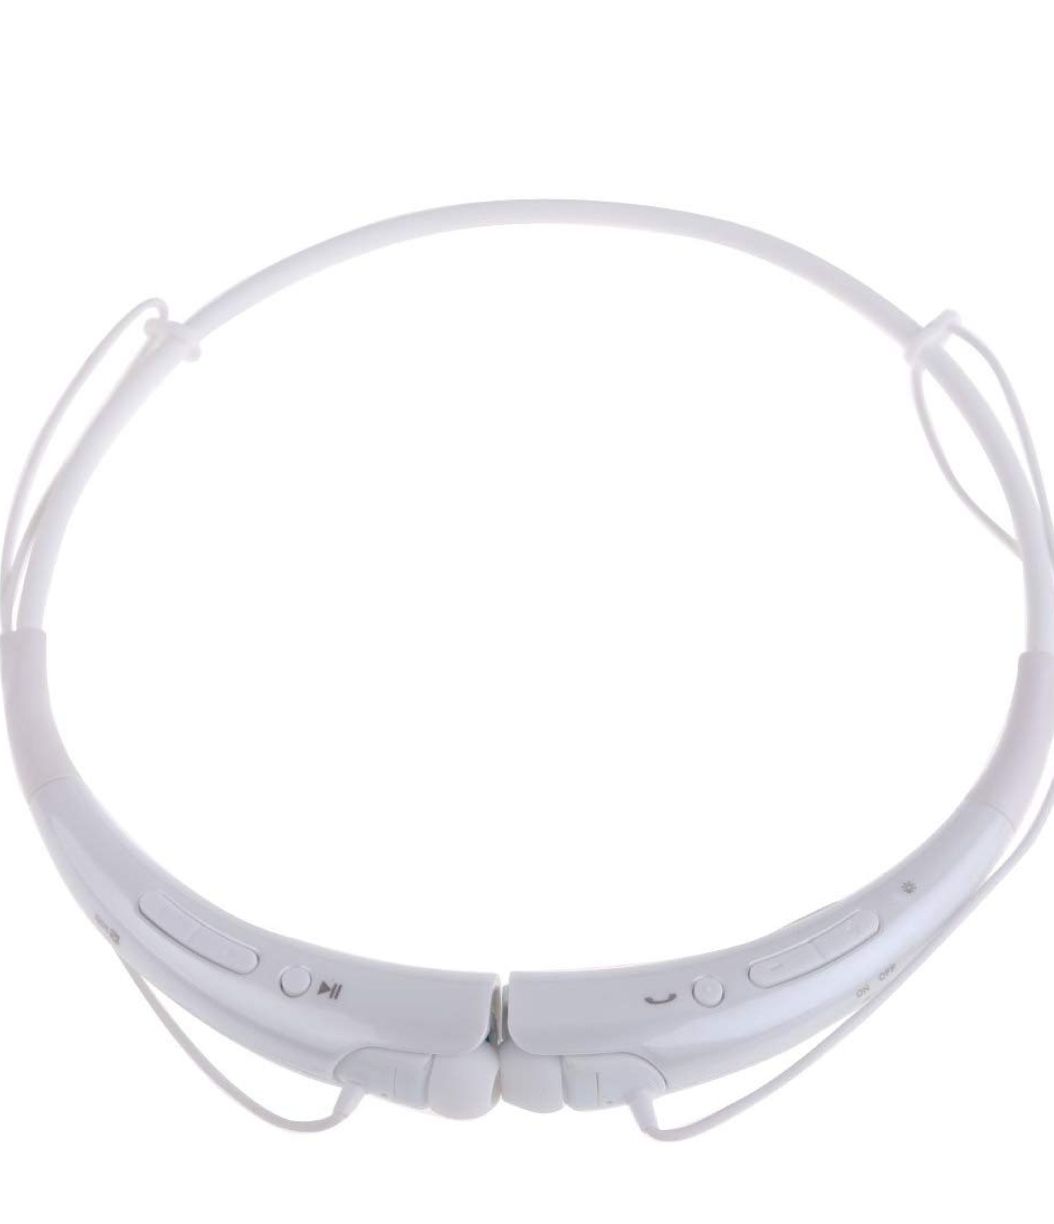 Vakind HBS-740 Universal Wireless Bluetooth V4.0 aptX Wireless Stereo Headphones with Microphone white